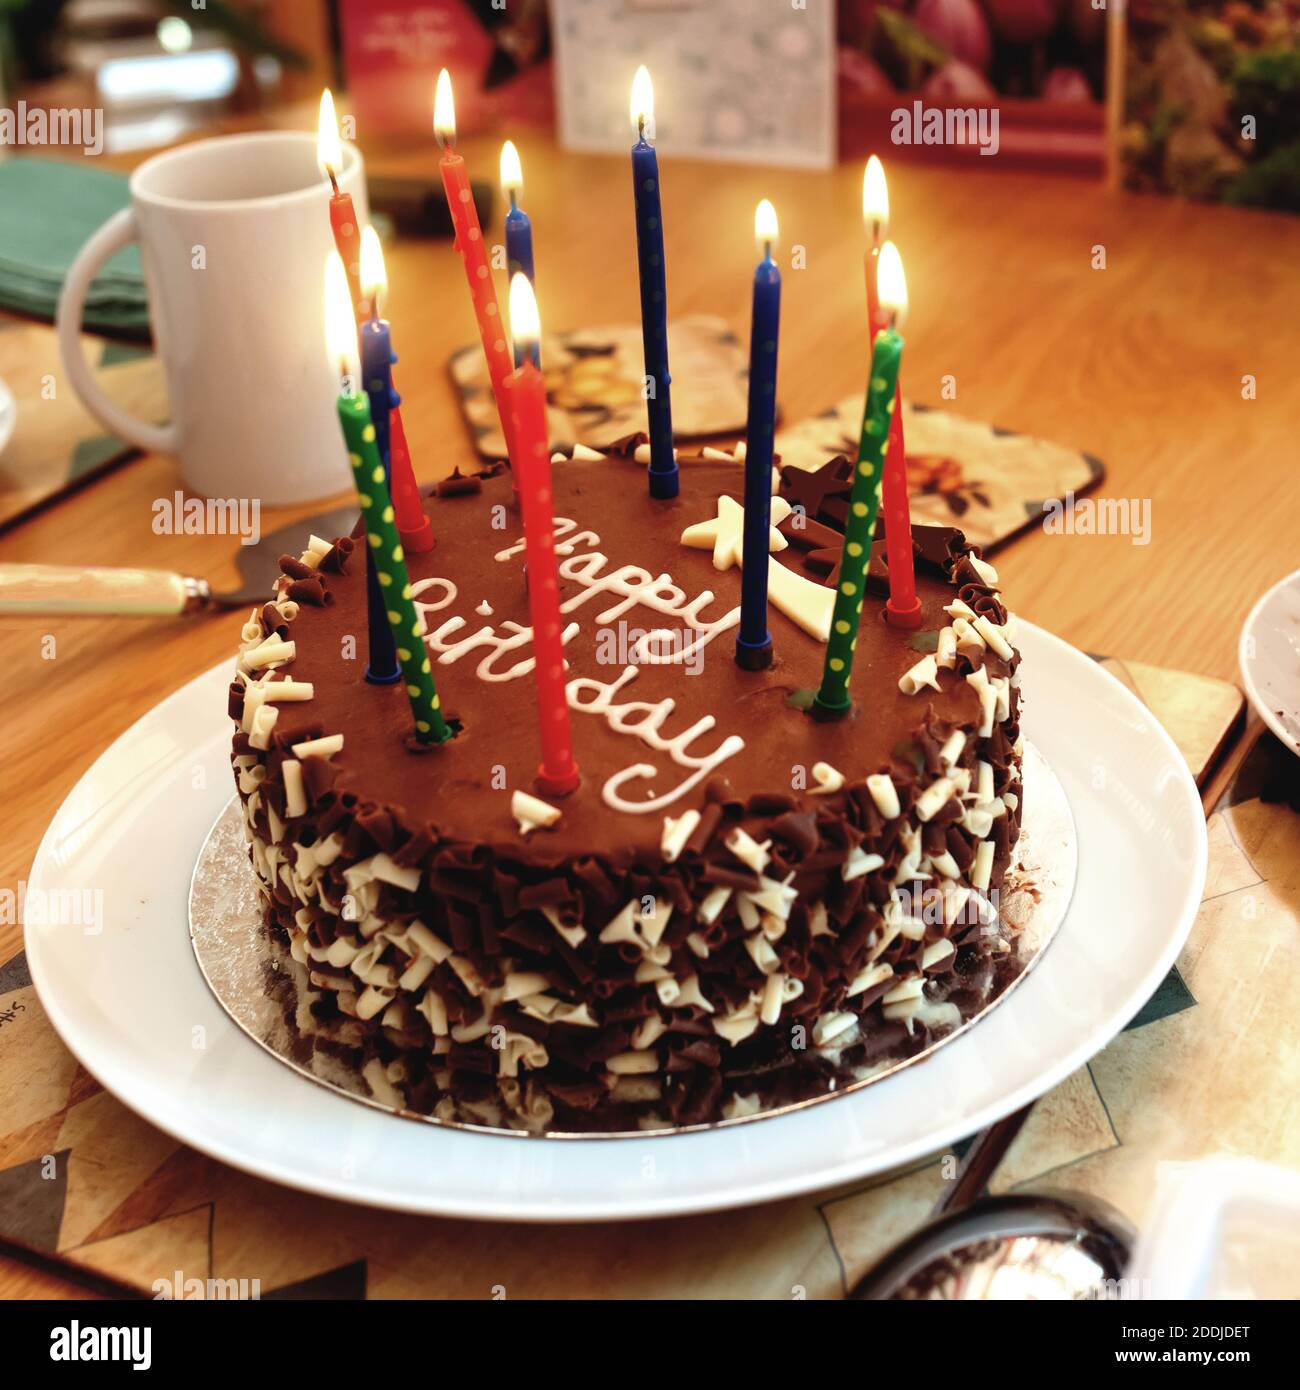 chocolate birthday cake with candles Stock Photo - Alamy